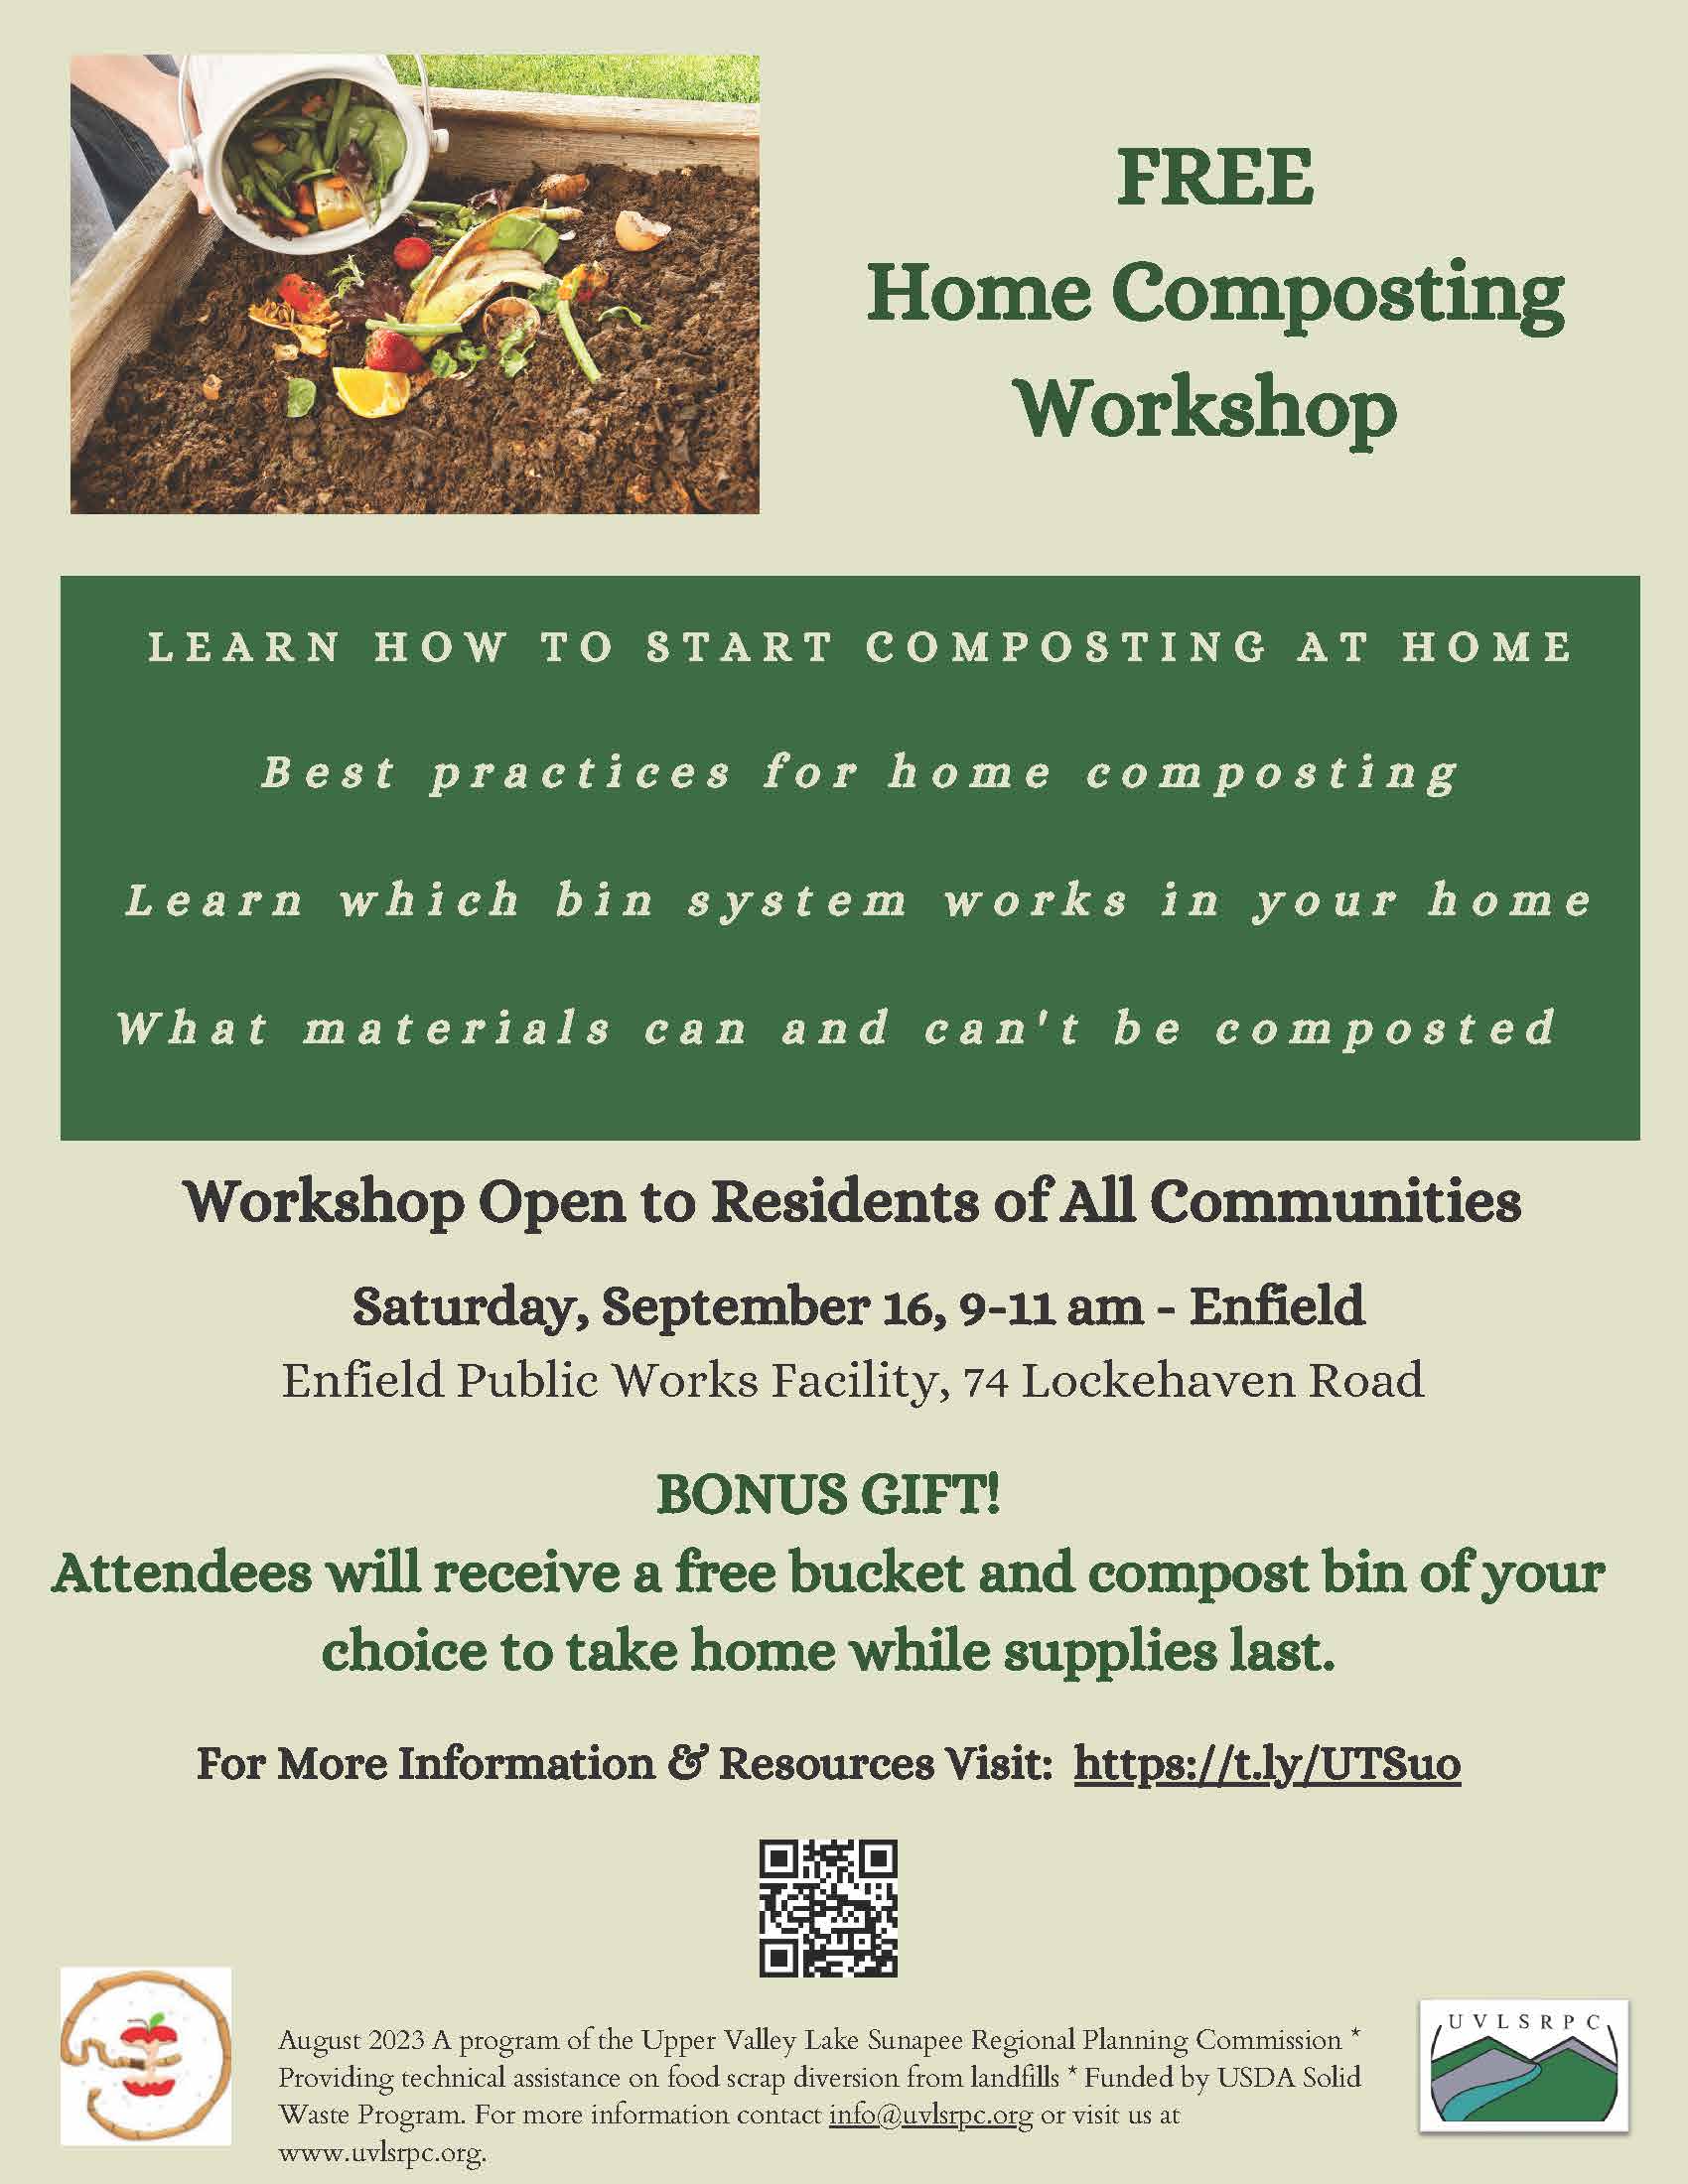 Free home composting workshop, September 16, 2023, from 9-11am